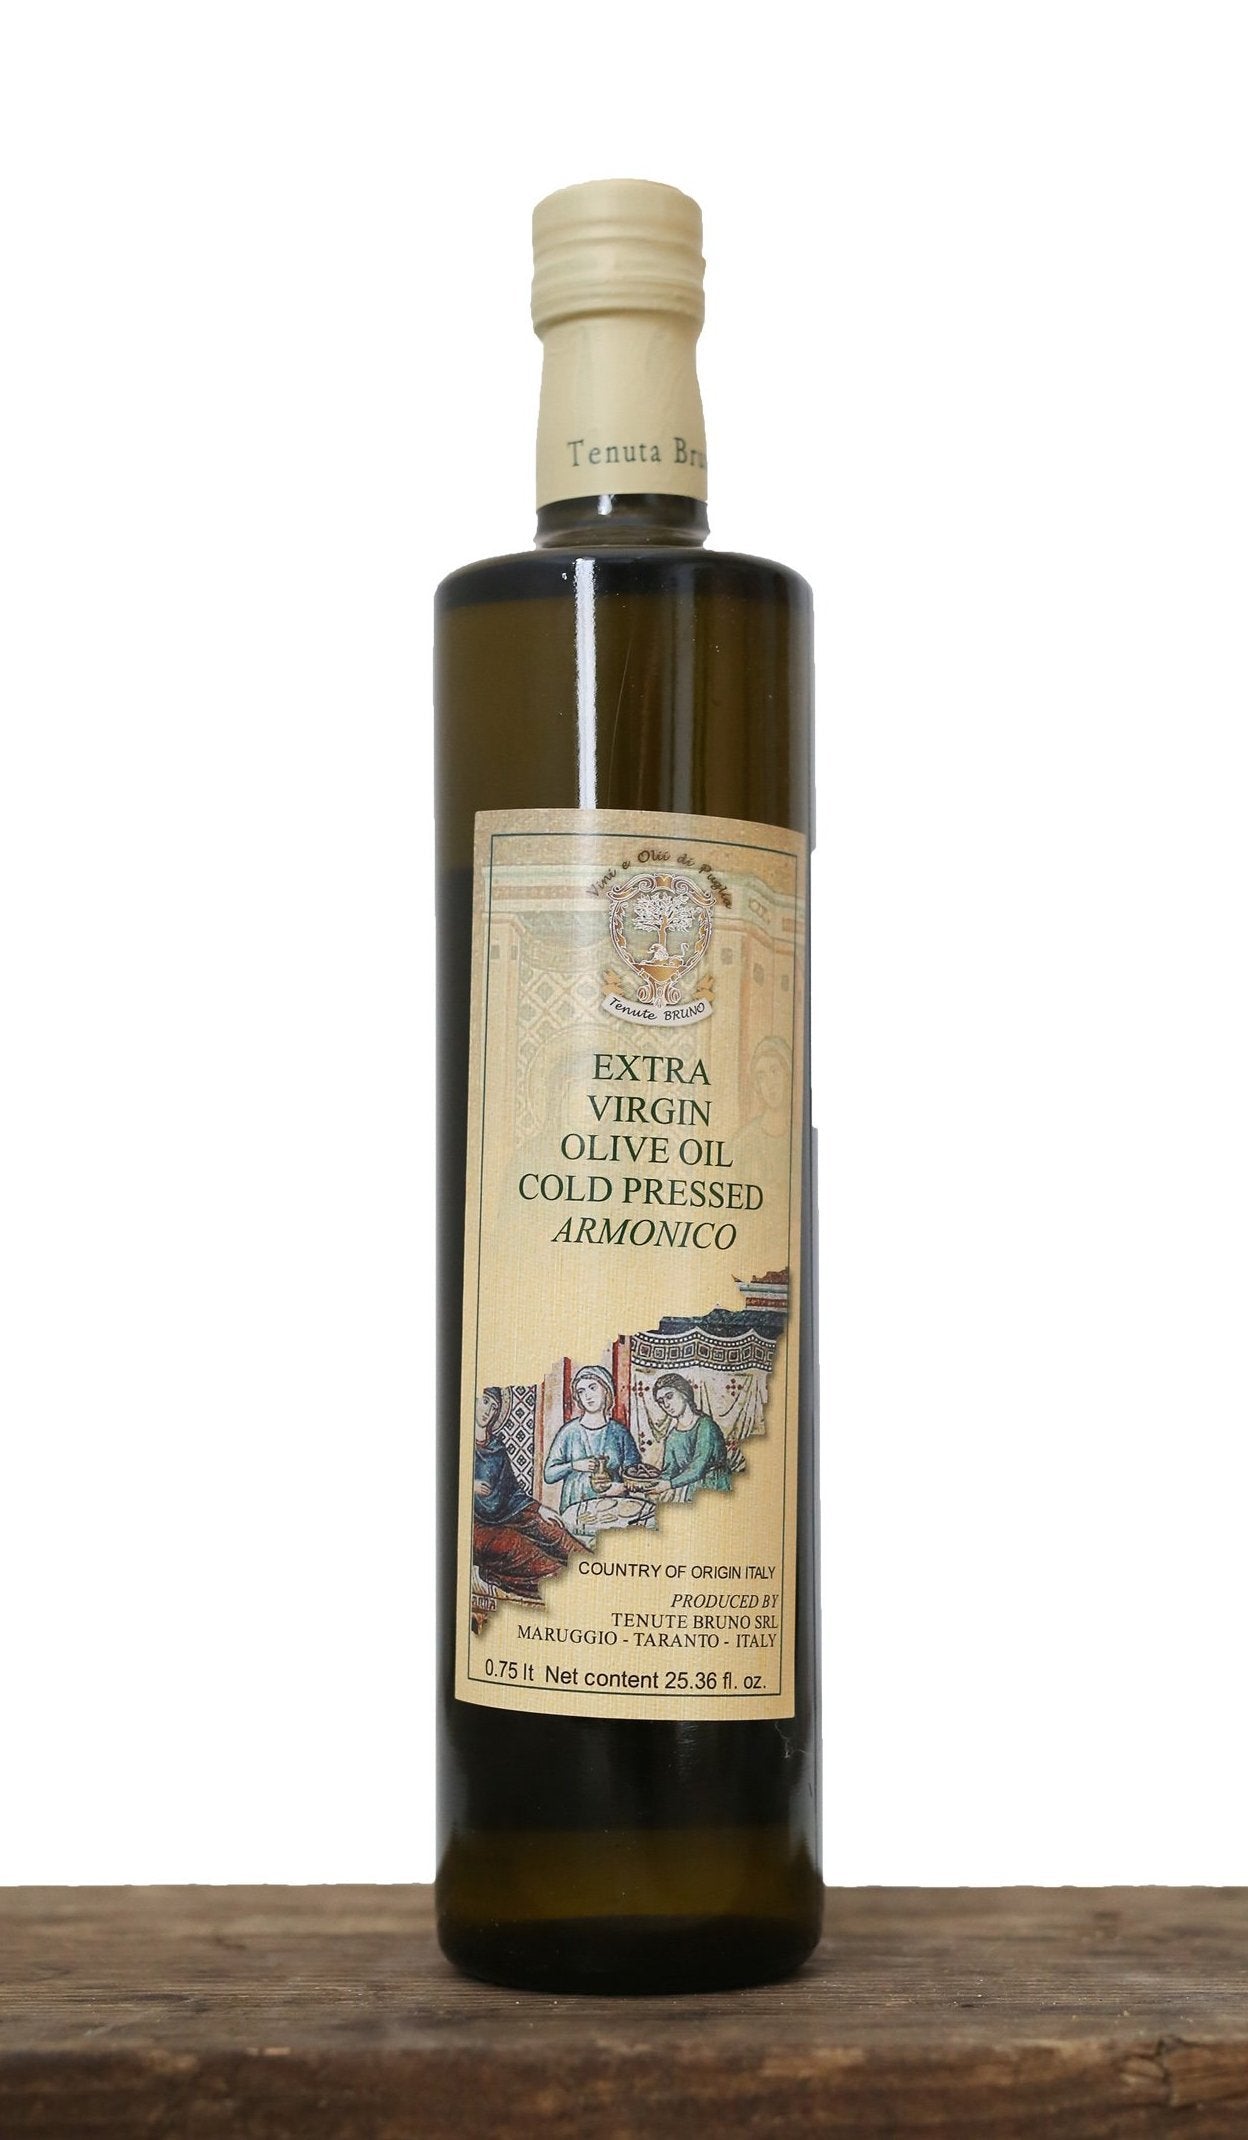 Extra Virgin Olive Oil “Armonico”